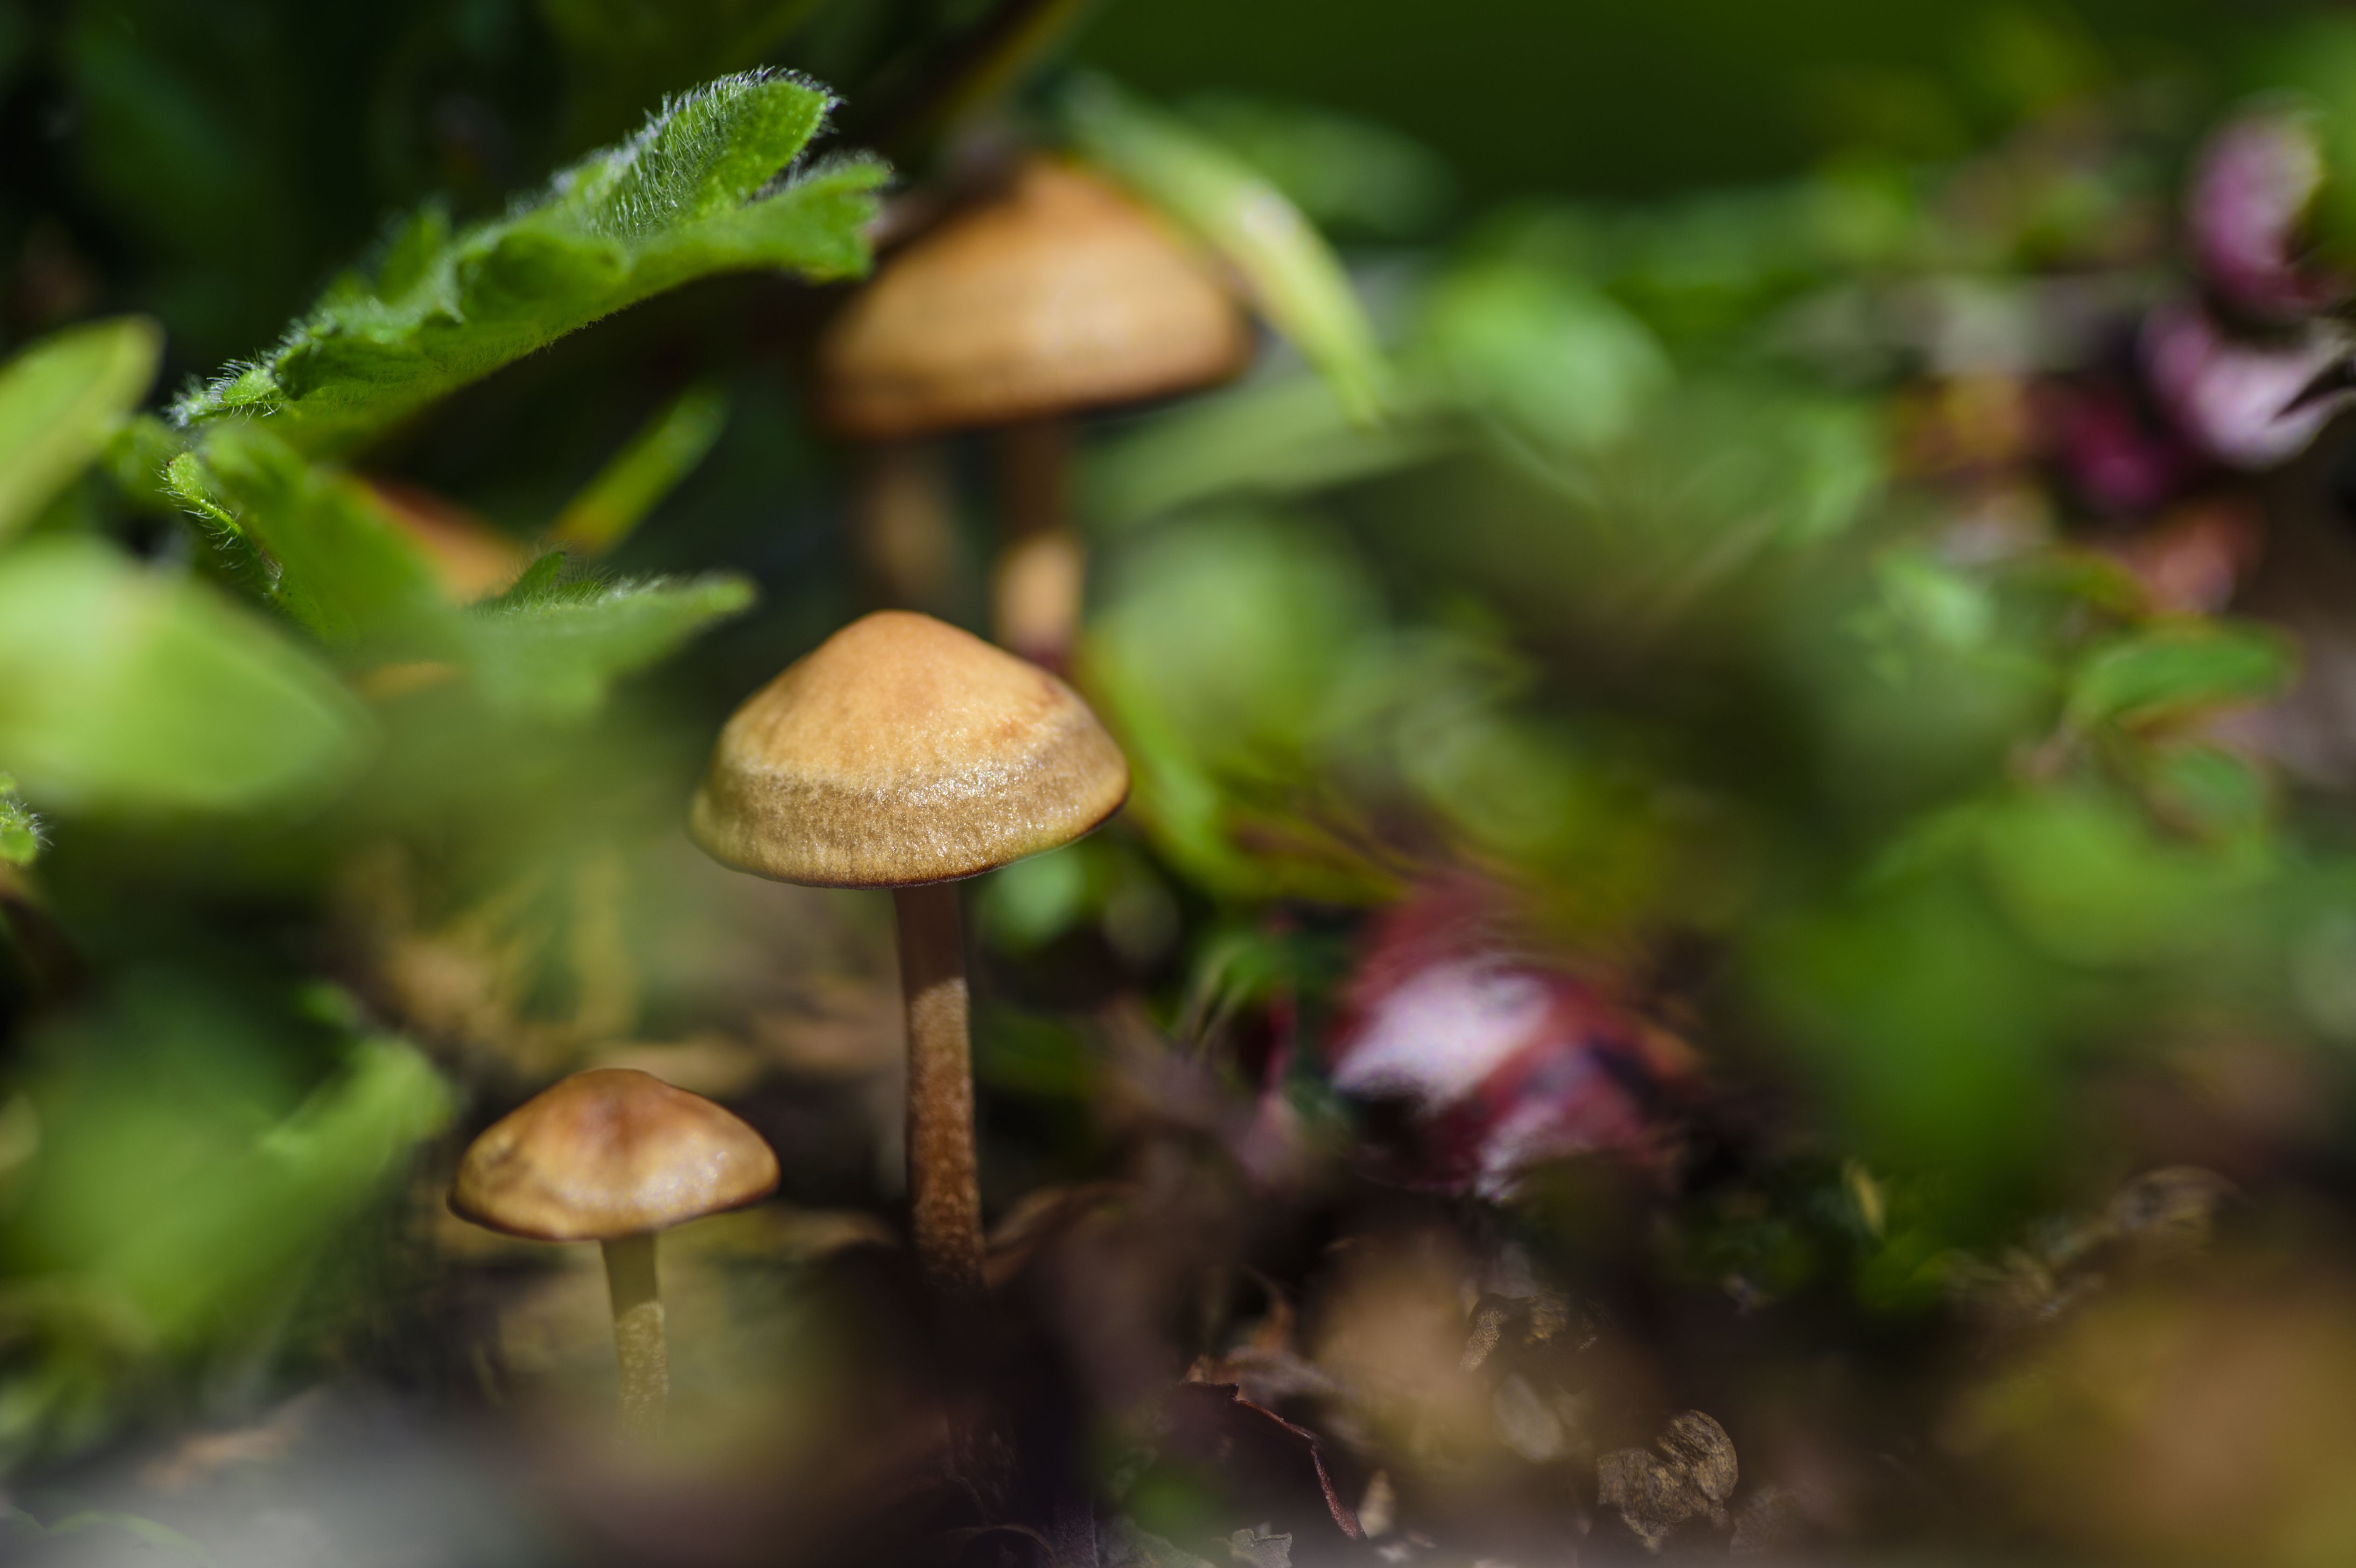 Magic Mushrooms Forest Psychedelic Fungi Sticker - Psychonautica